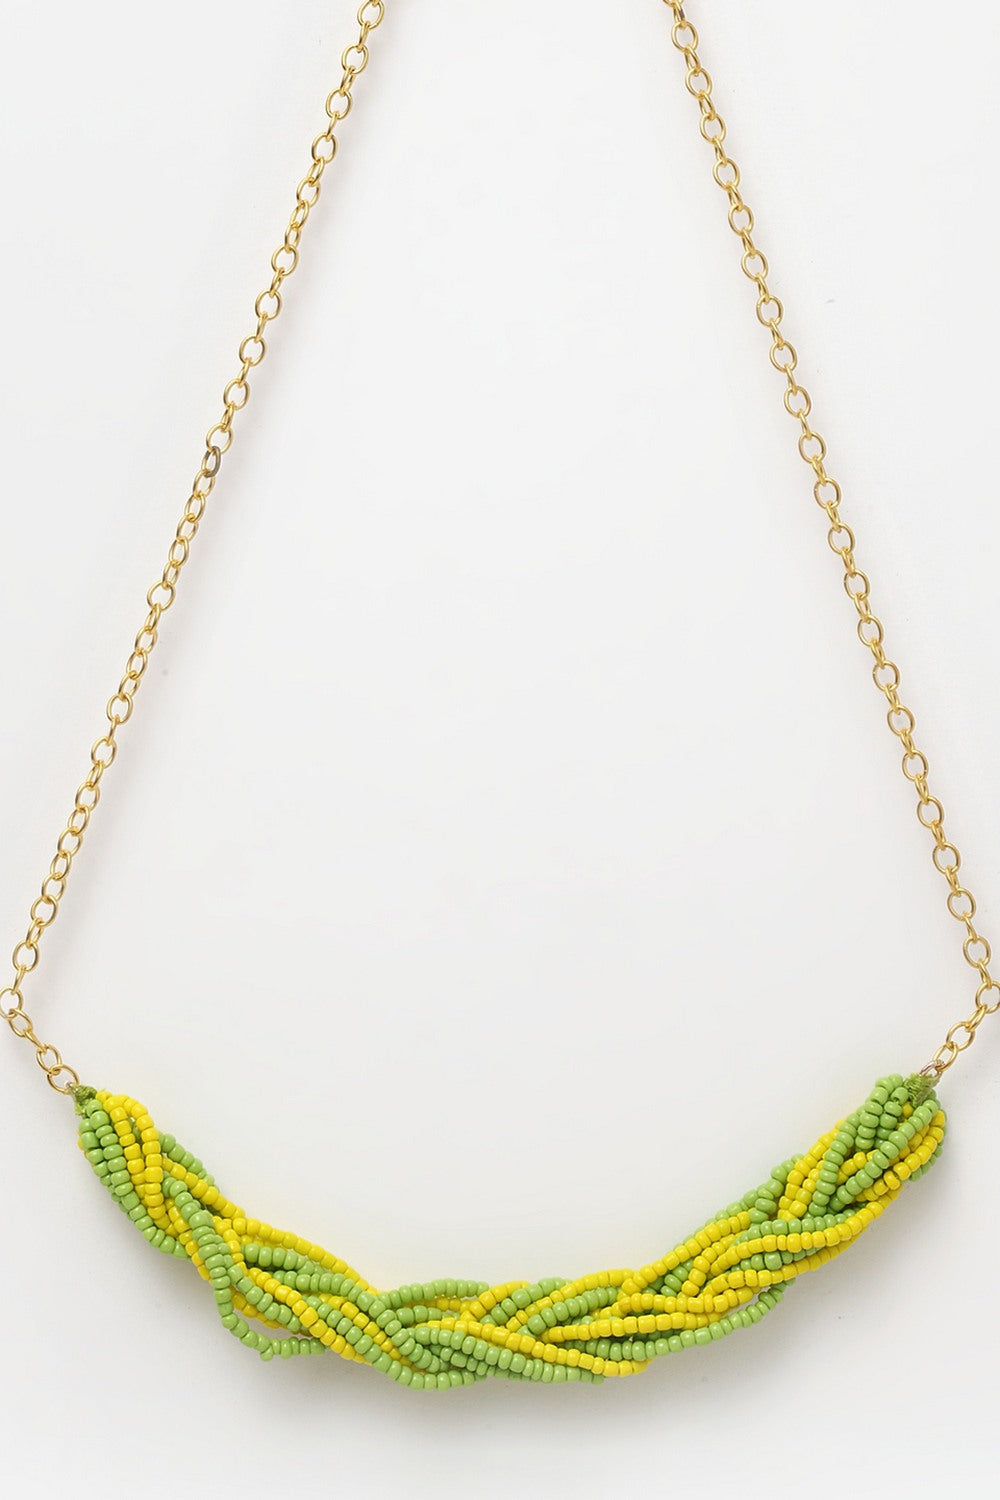 Shop Women's Brass Necklace Online